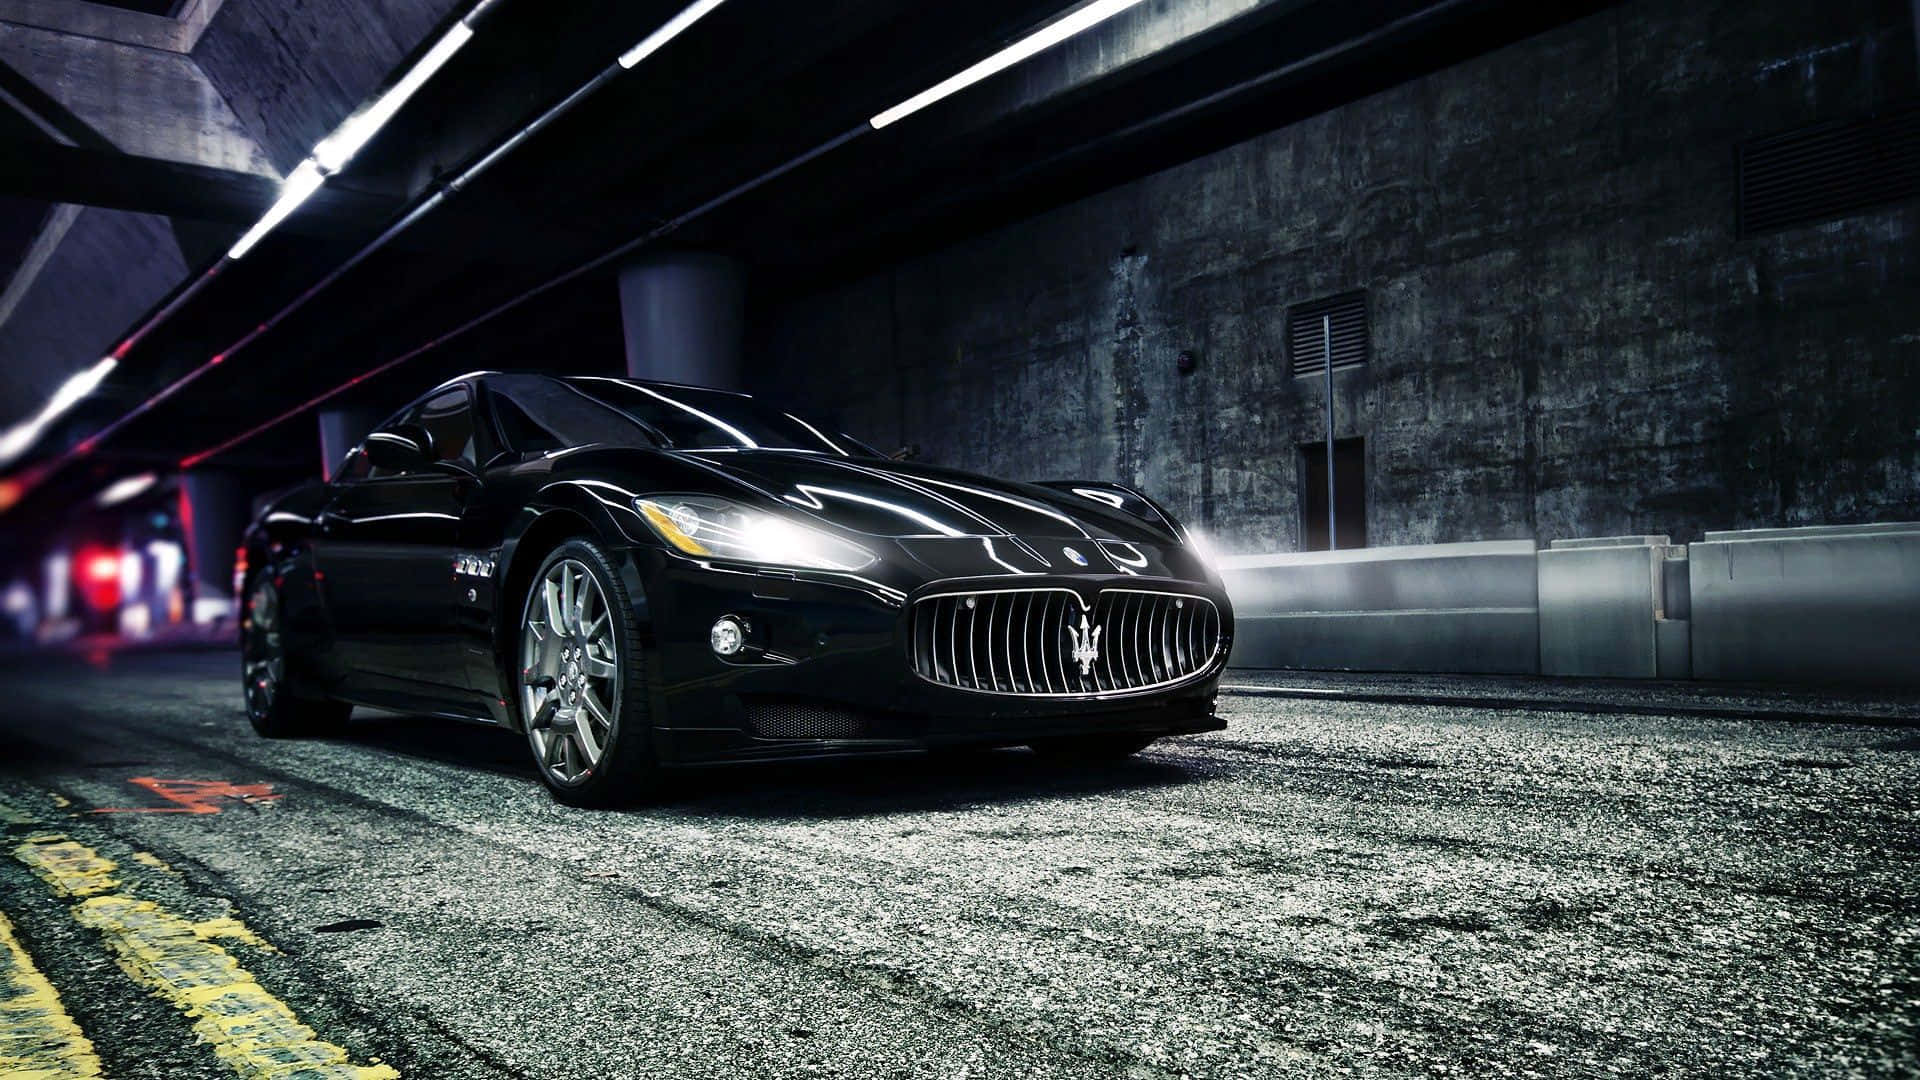 Stunning Profile View Of Maserati Granturismo Wallpaper